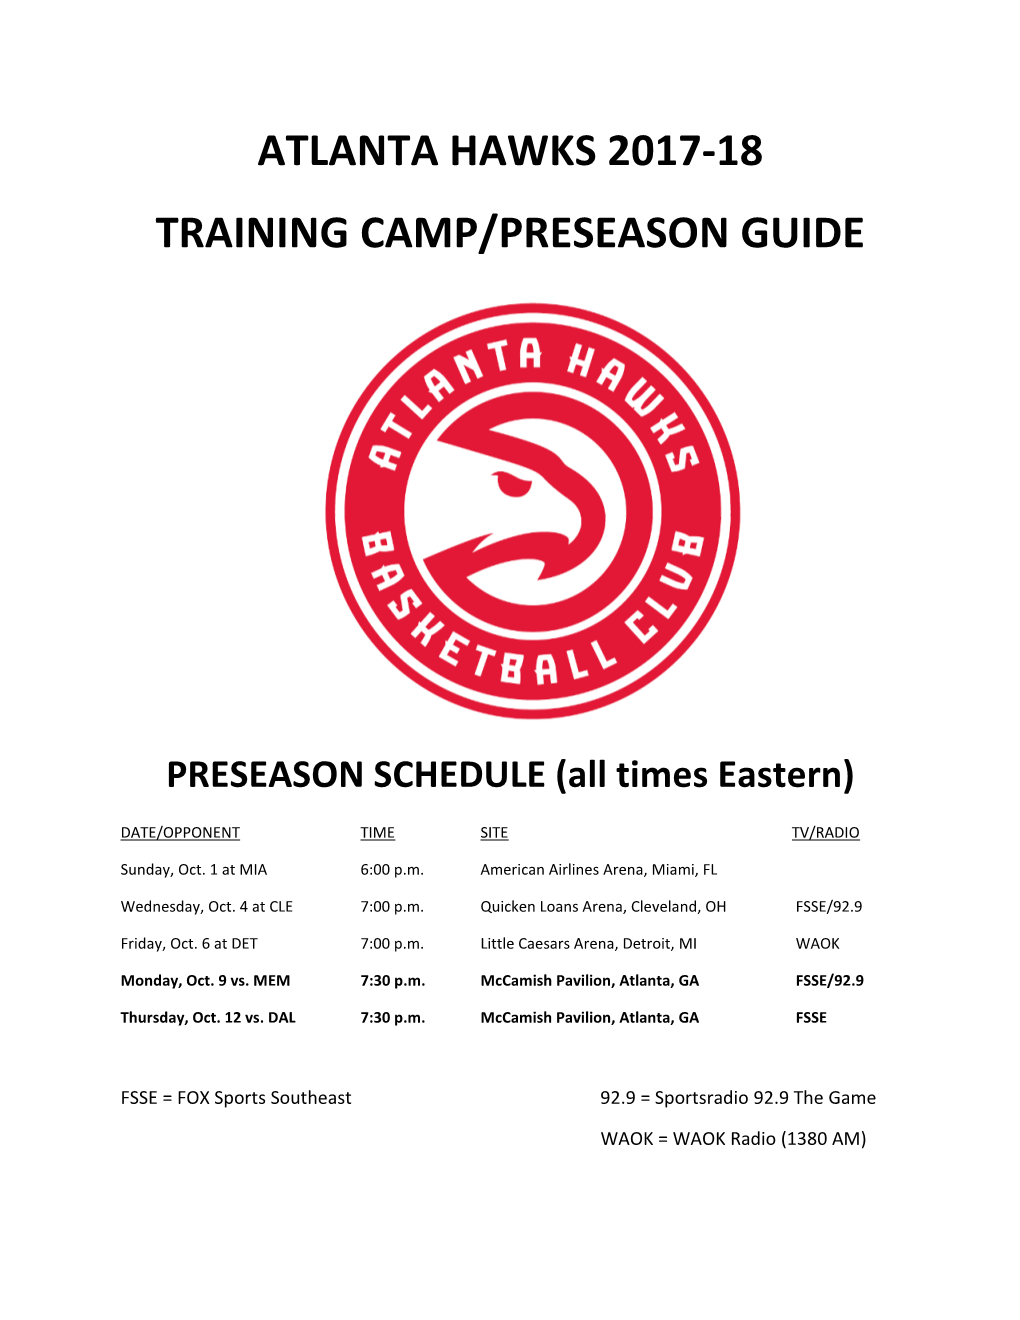 Atlanta Hawks 2017-18 Training Camp/Preseason Guide